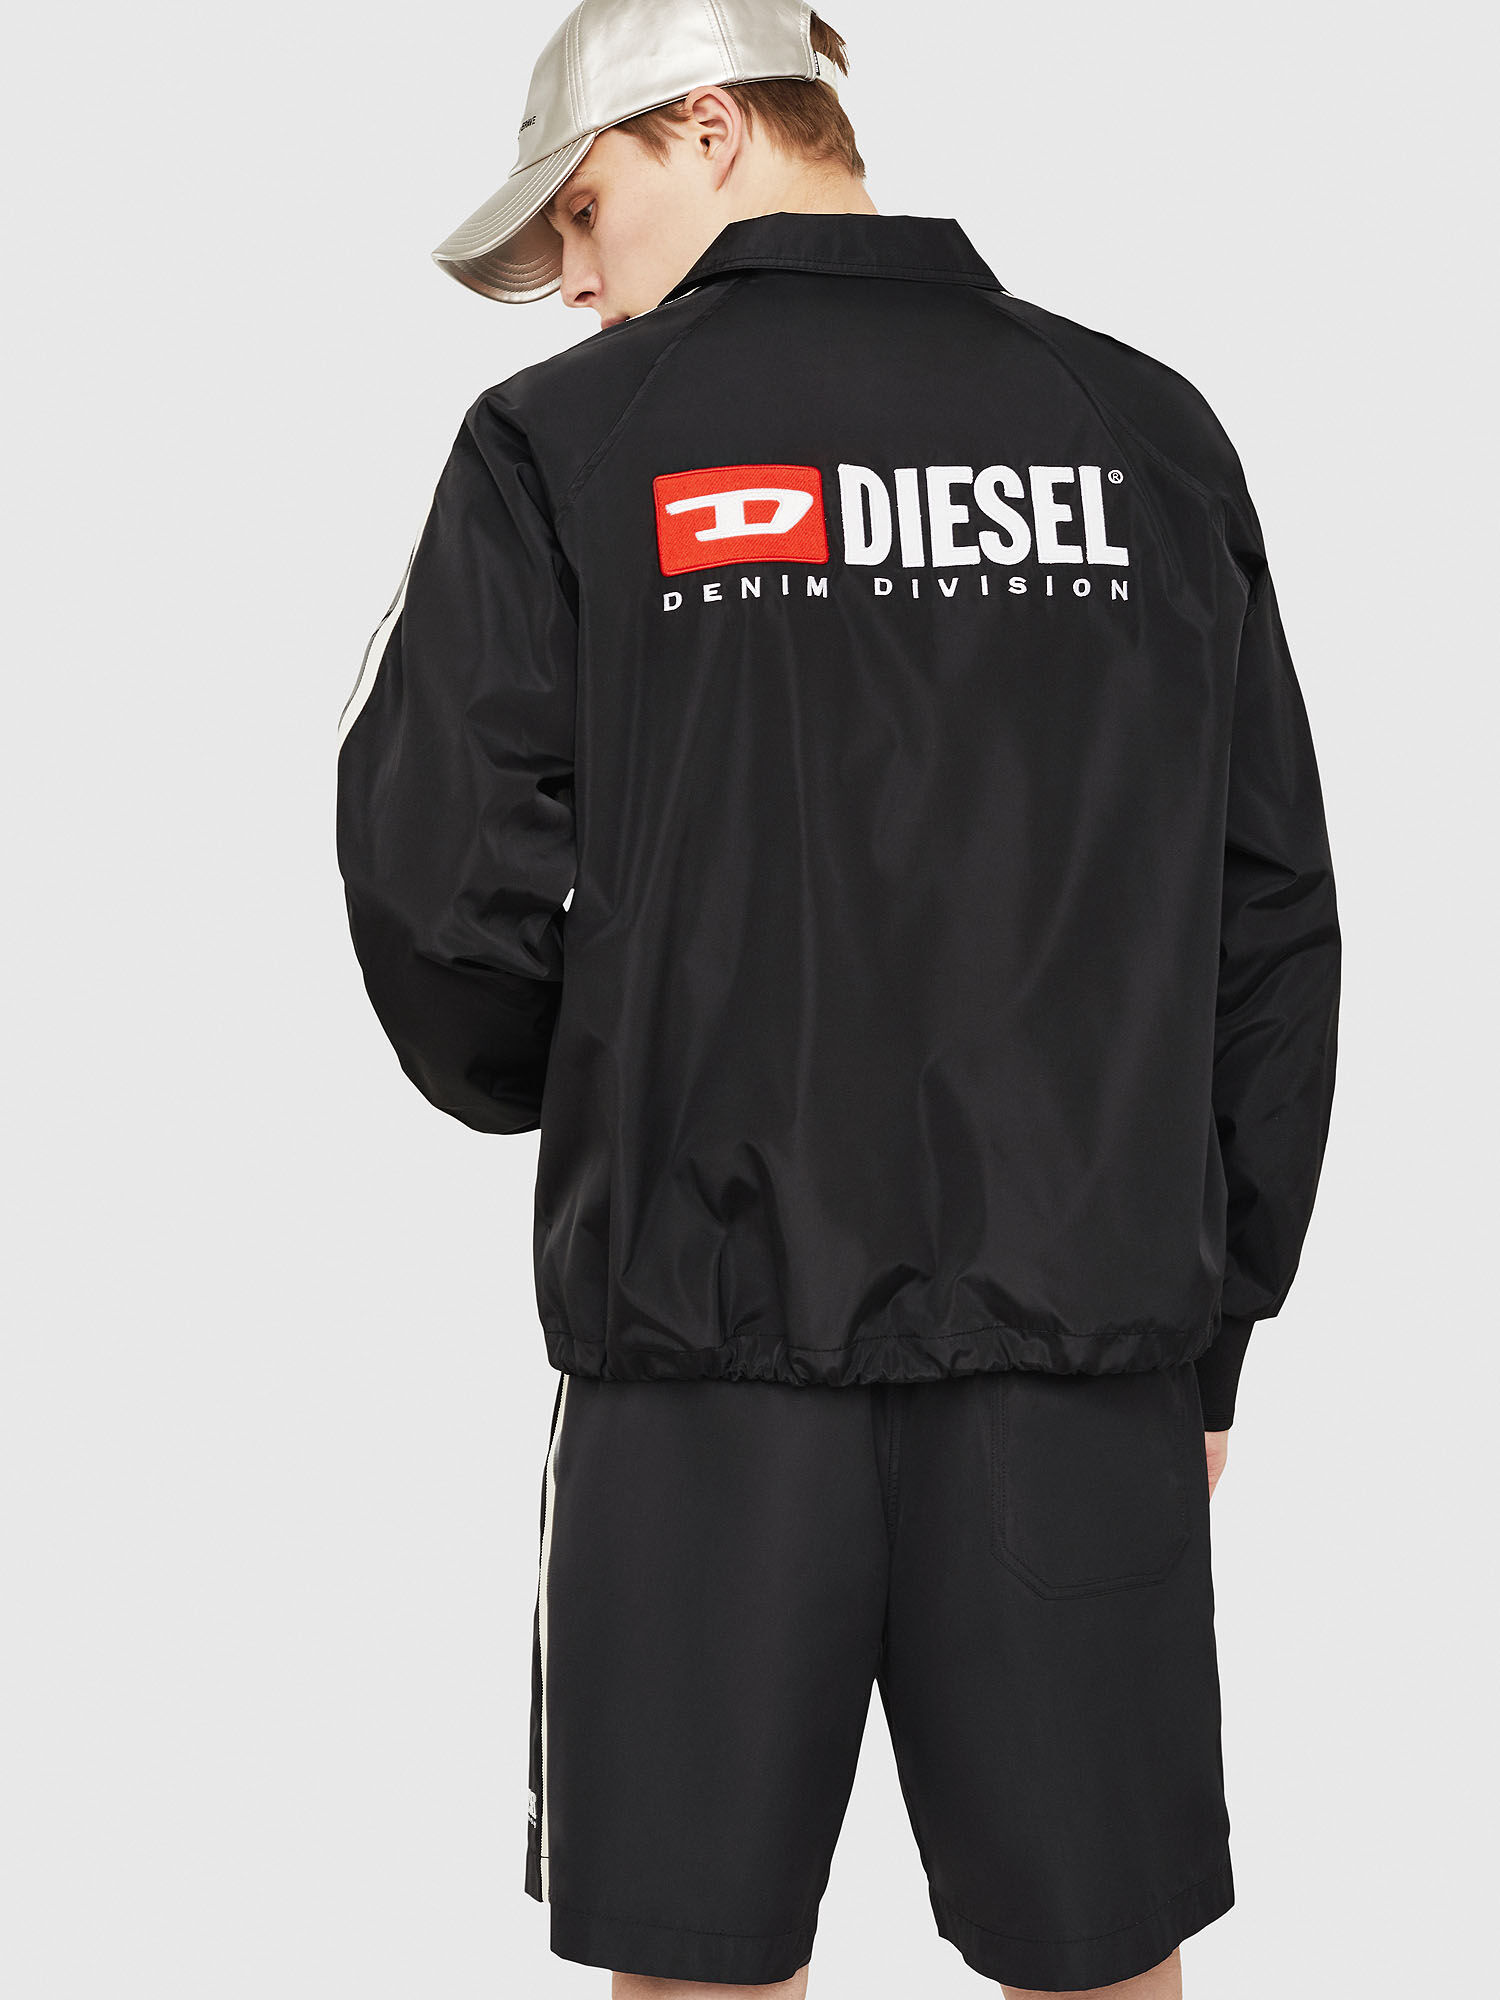 Mens Diesel Jacket Size Chart